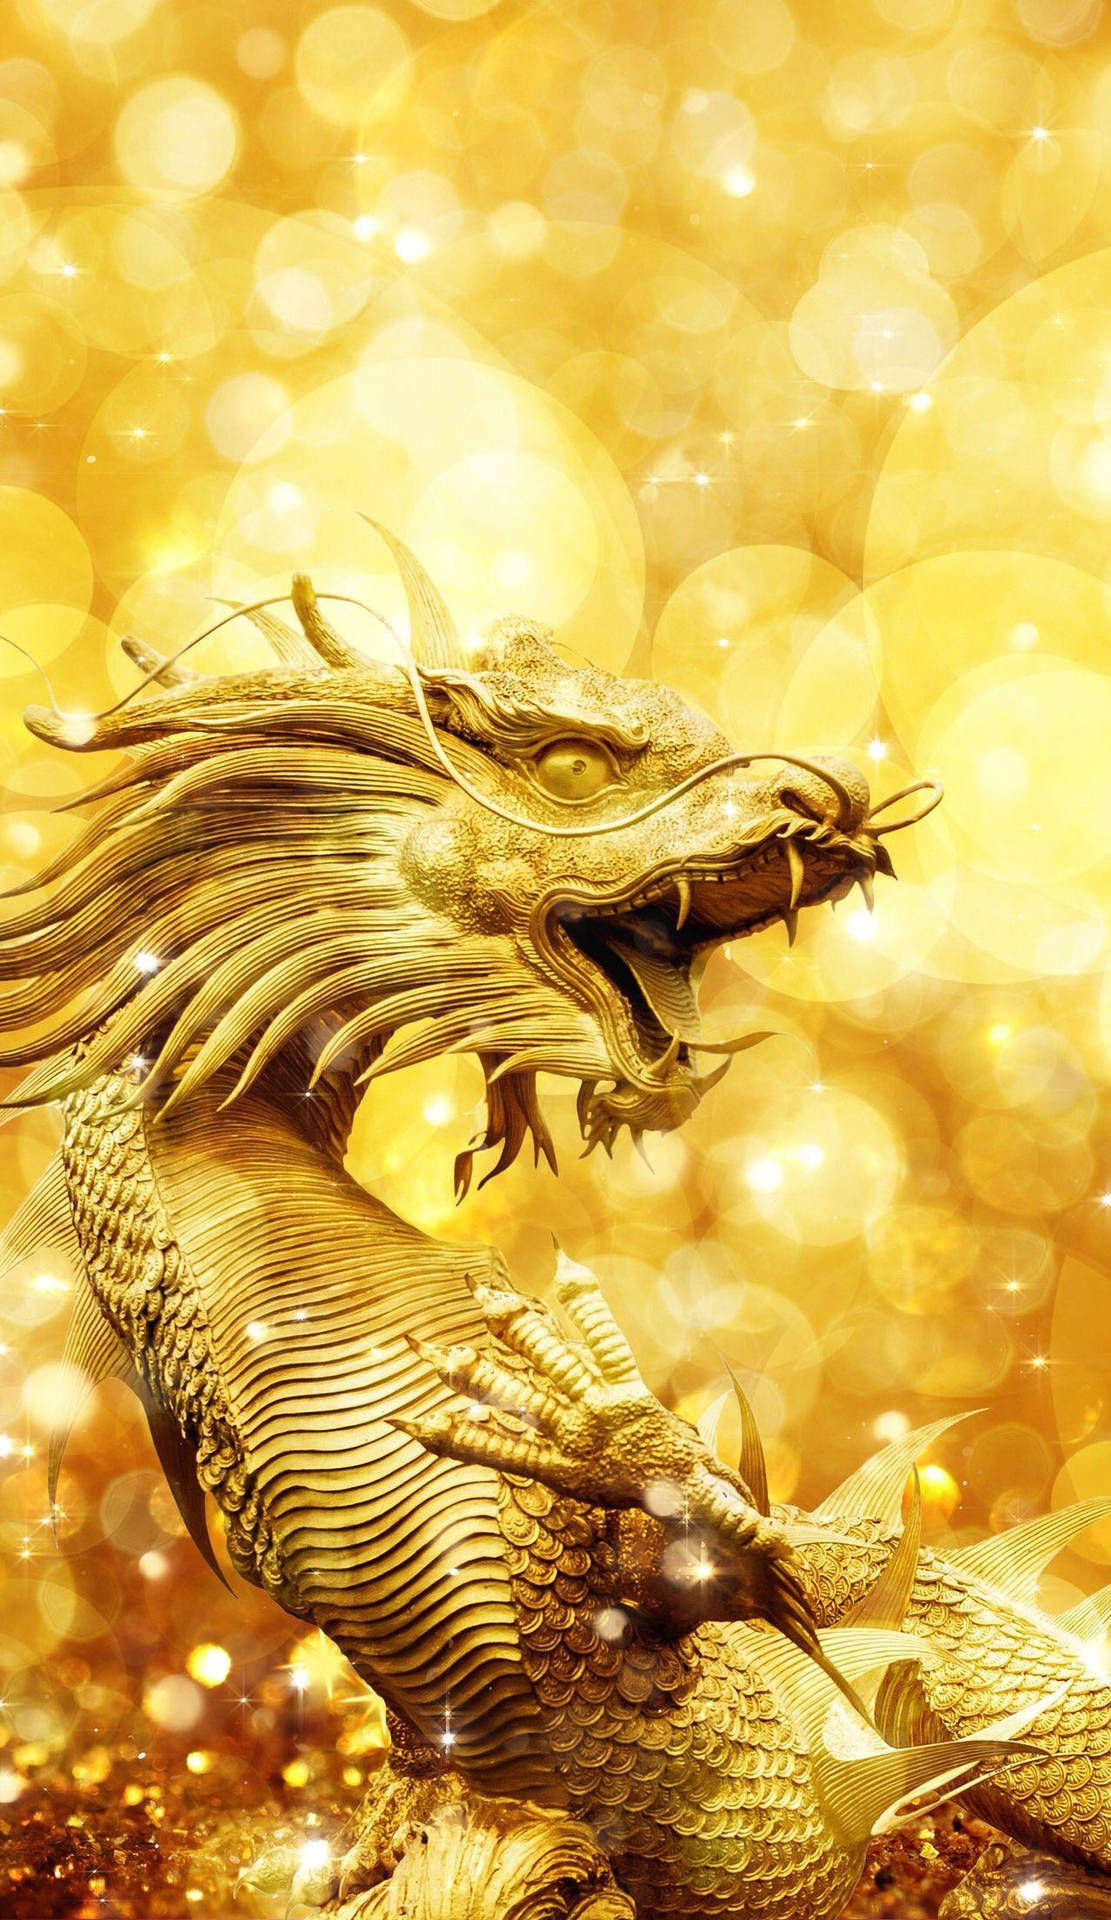 Golden Dragon Glowing Statue Background